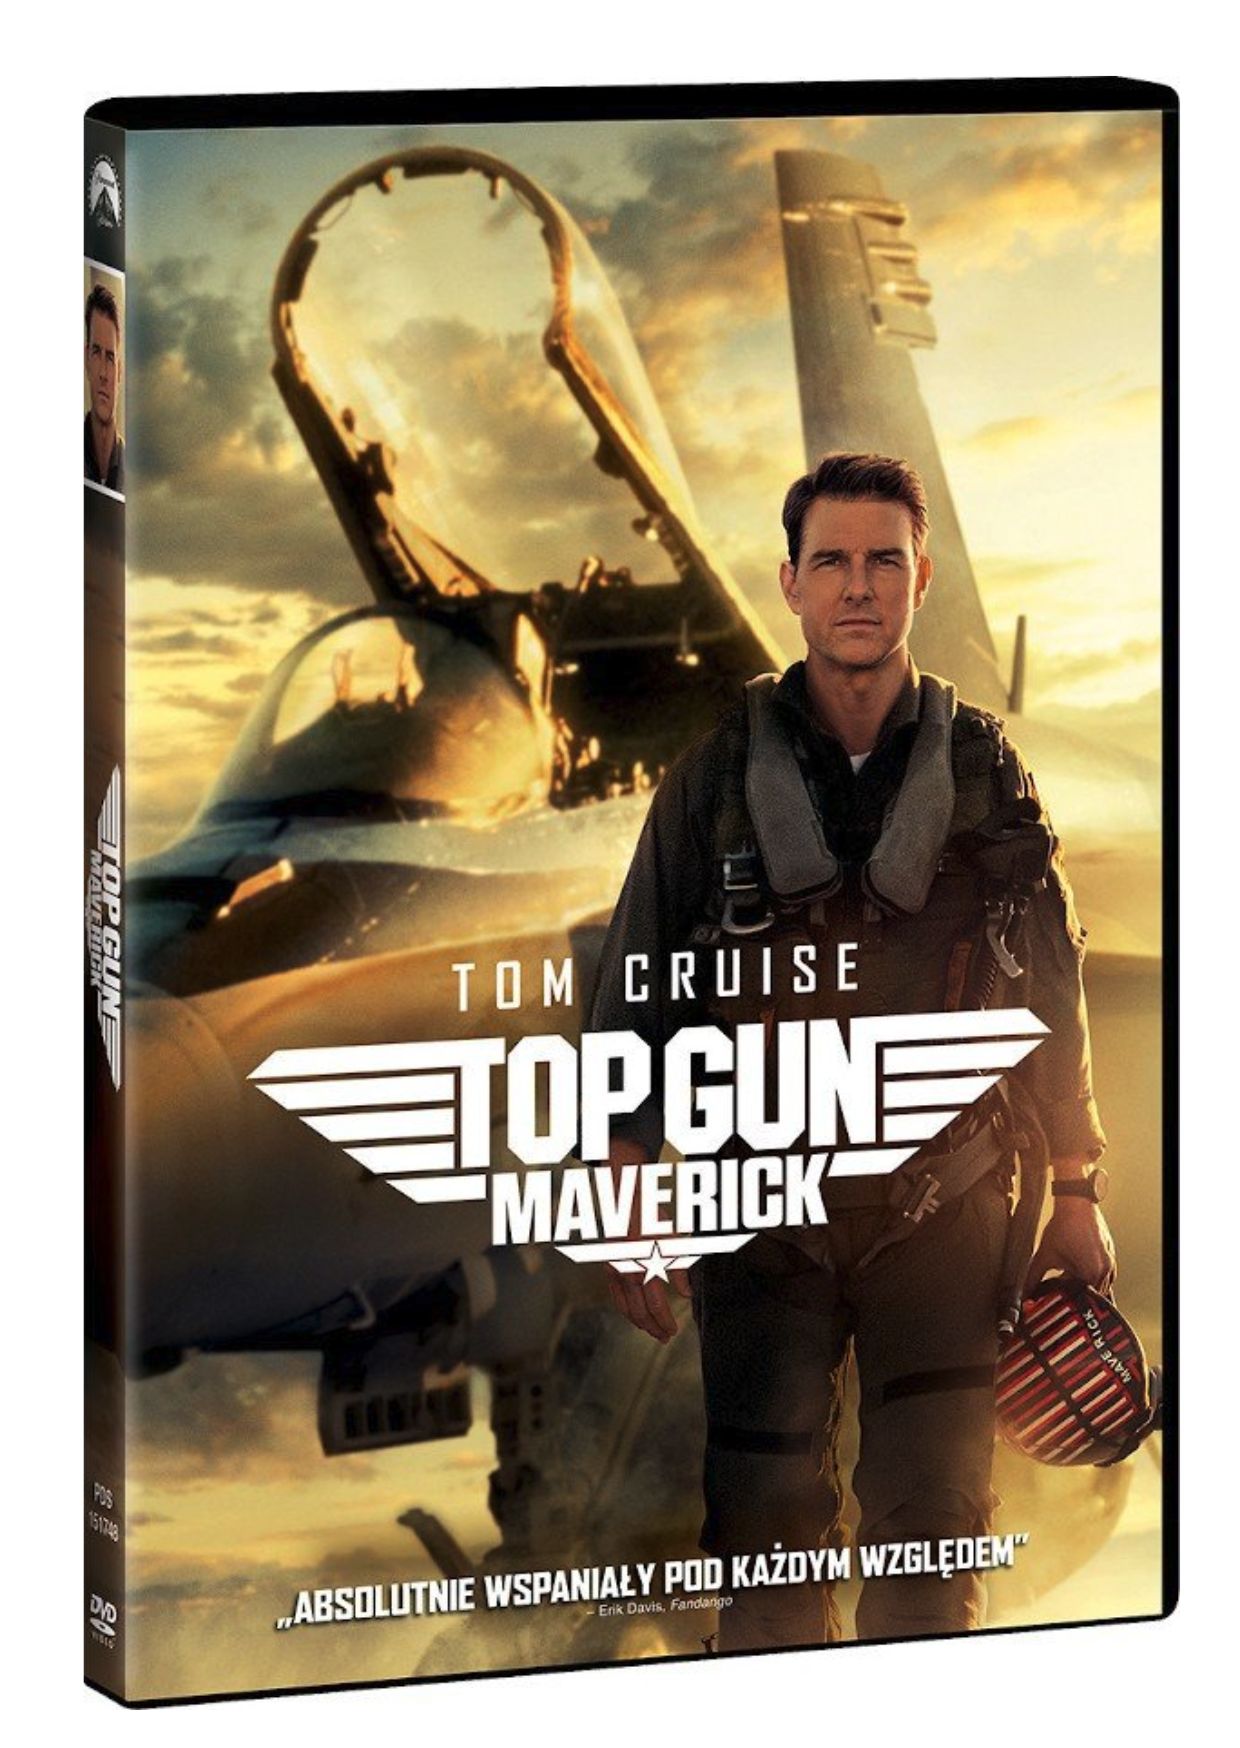 Okładka filmu na płycie DVD o tytule Top Gun Maverick